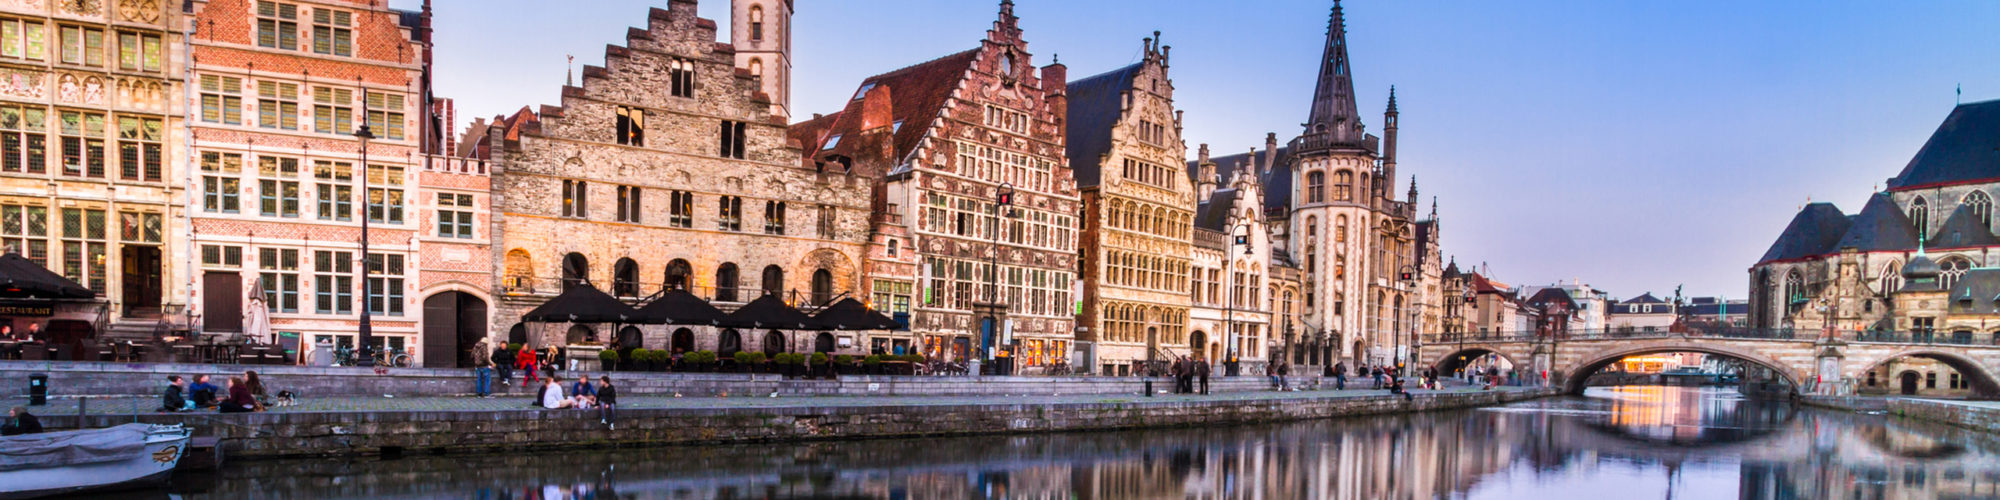 Belgium Travel travel agents packages deals